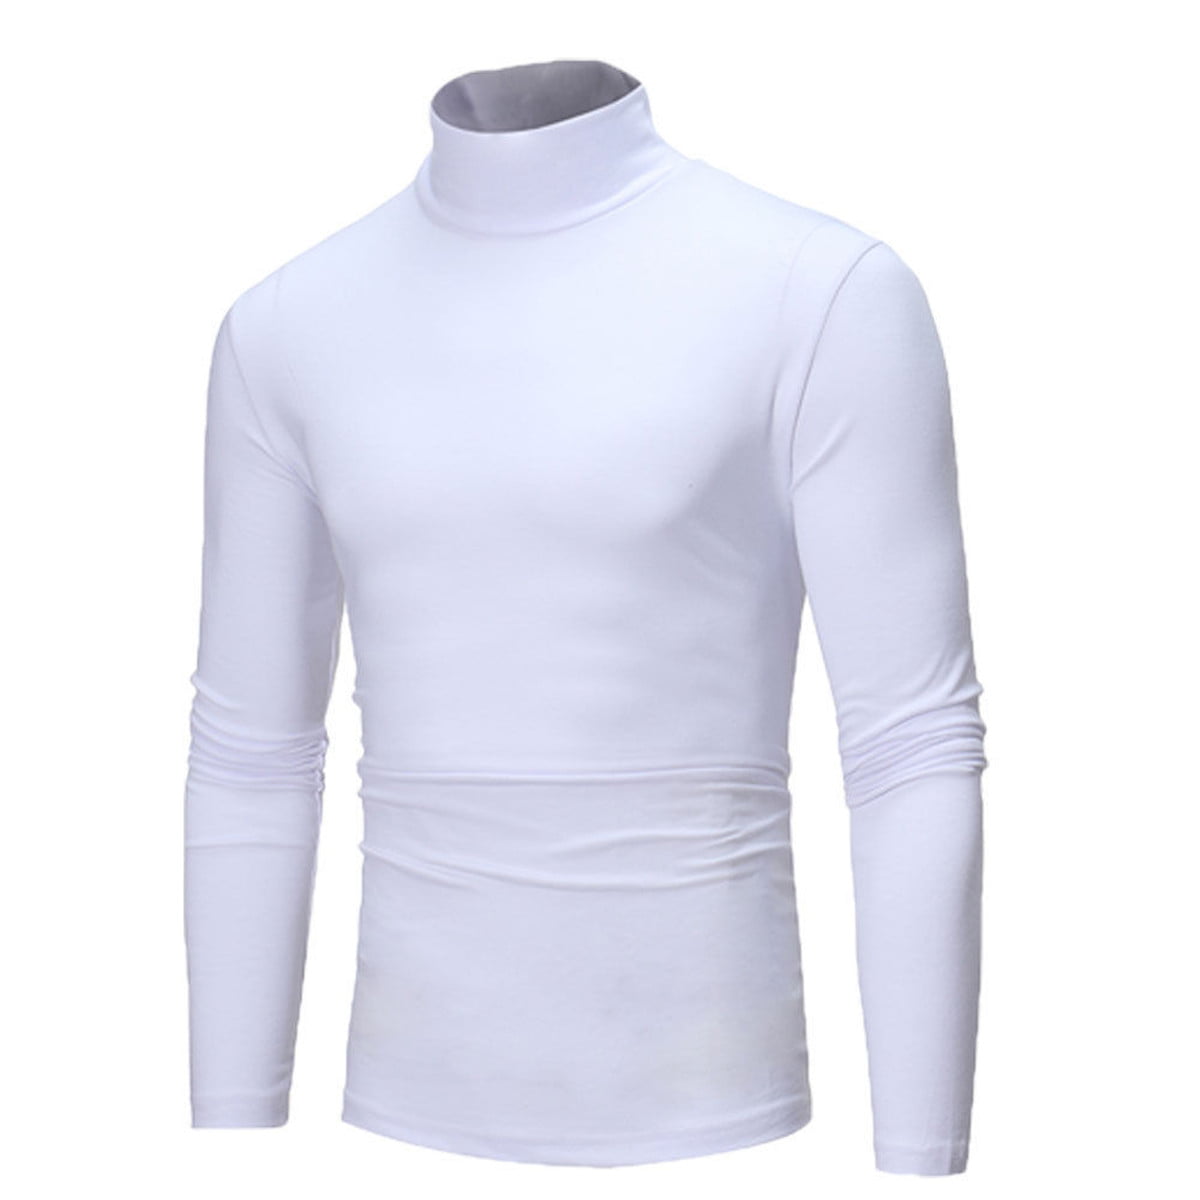 Calsunbaby Men Cotton High Neck Pullover Sweater Tops Turtleneck Shirts ...